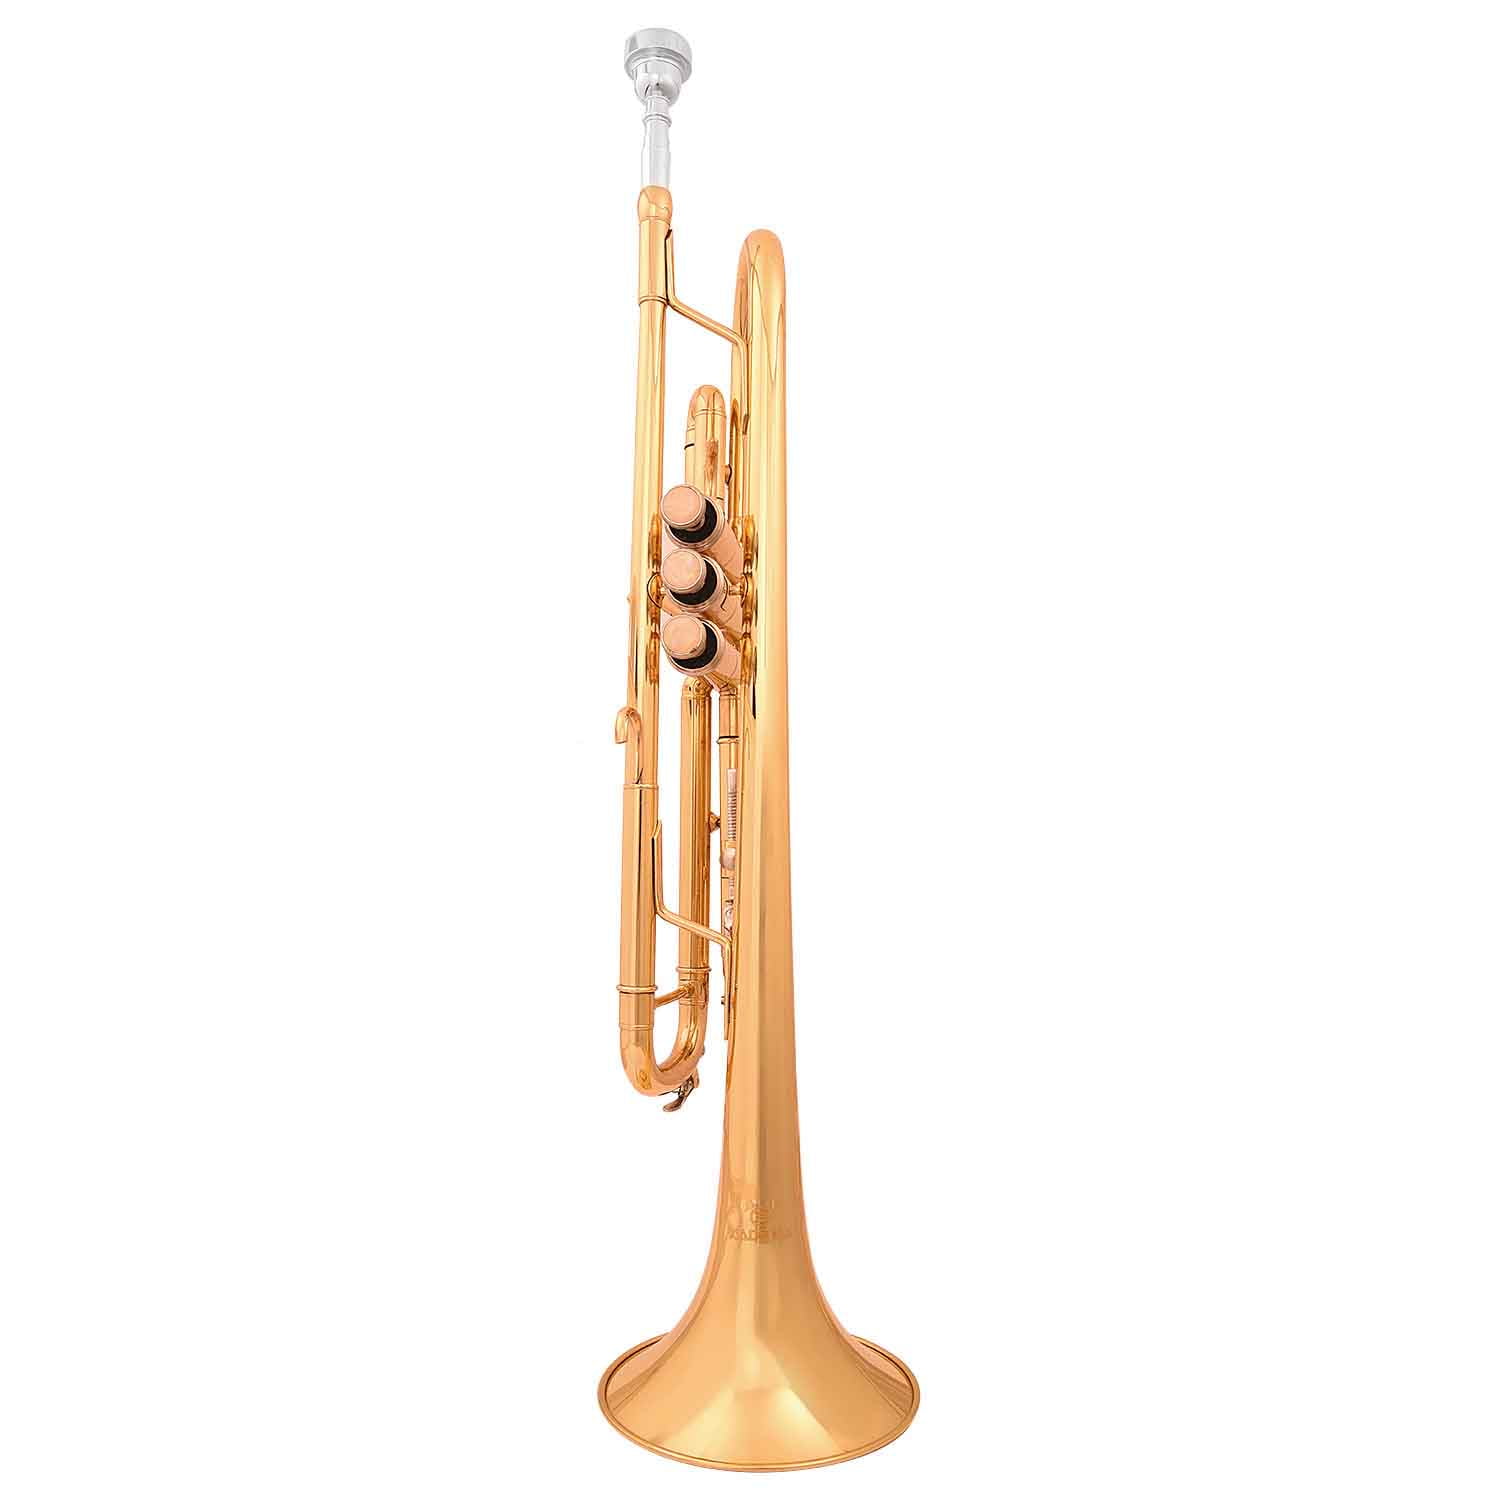 Buy Gold Brass Trumpet online & Upgrade your Sound - Kadence